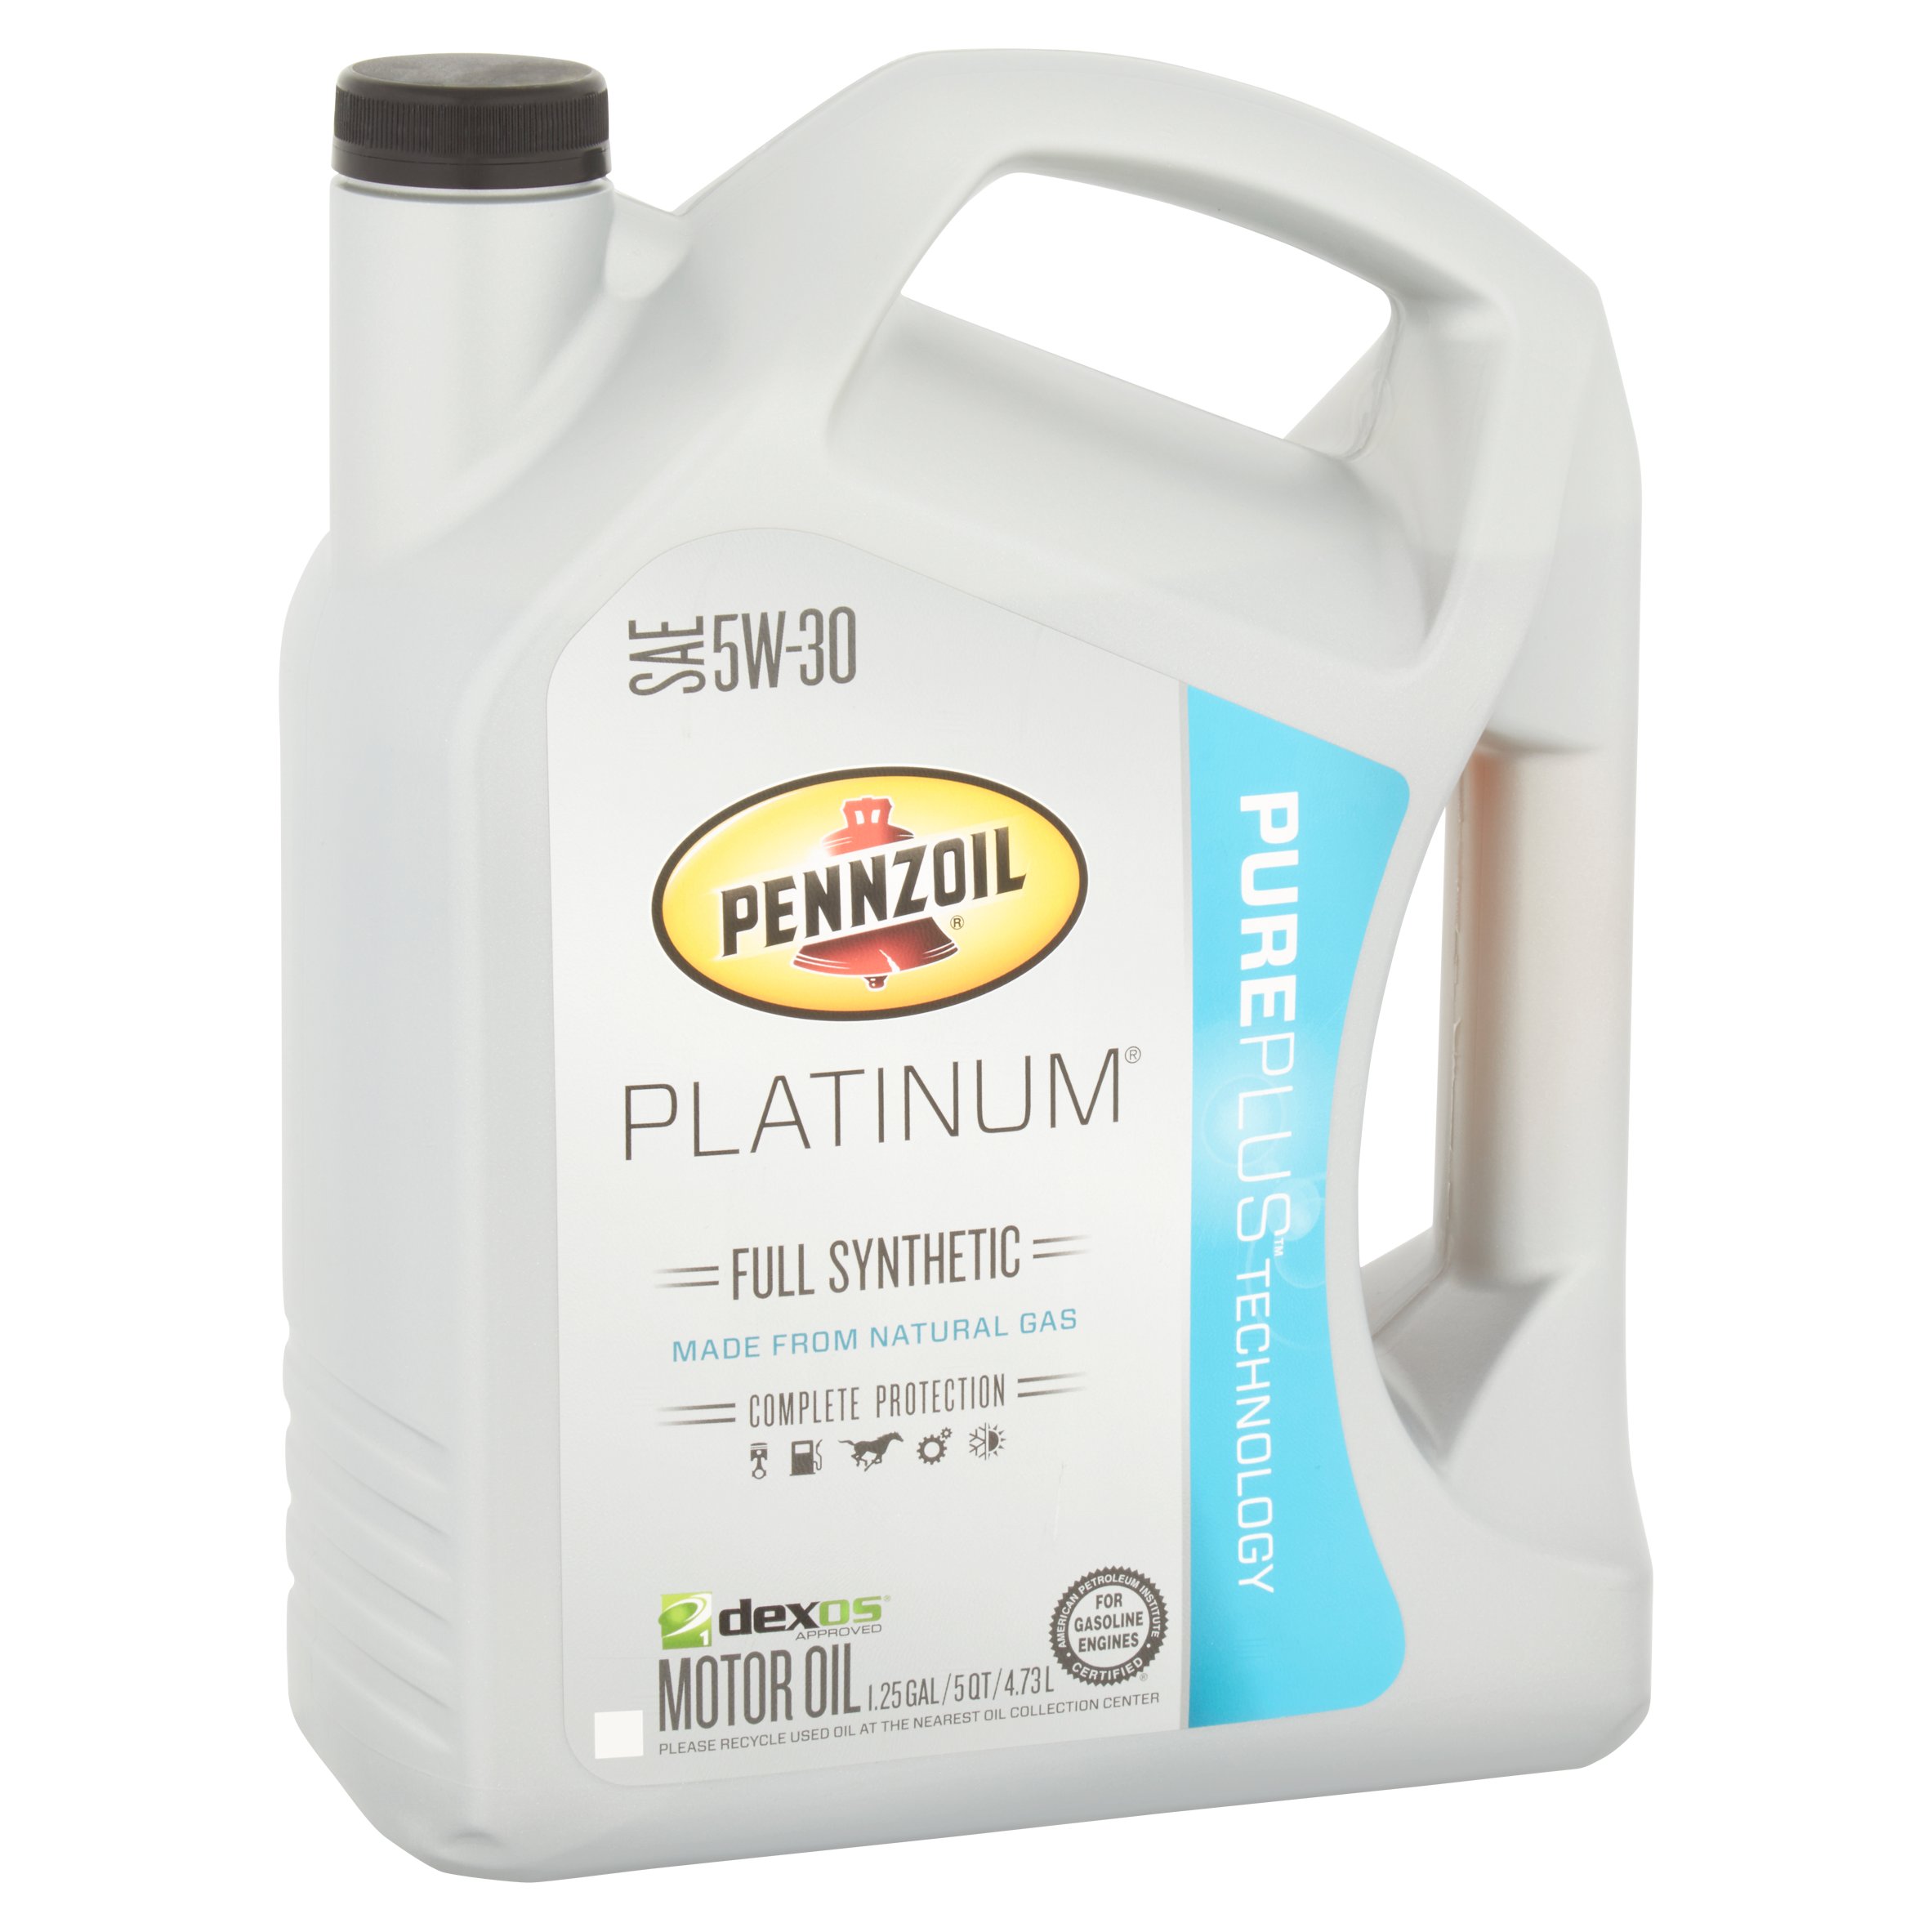 Pennzoil Platinum SAE 5W-30 Full Synthetic